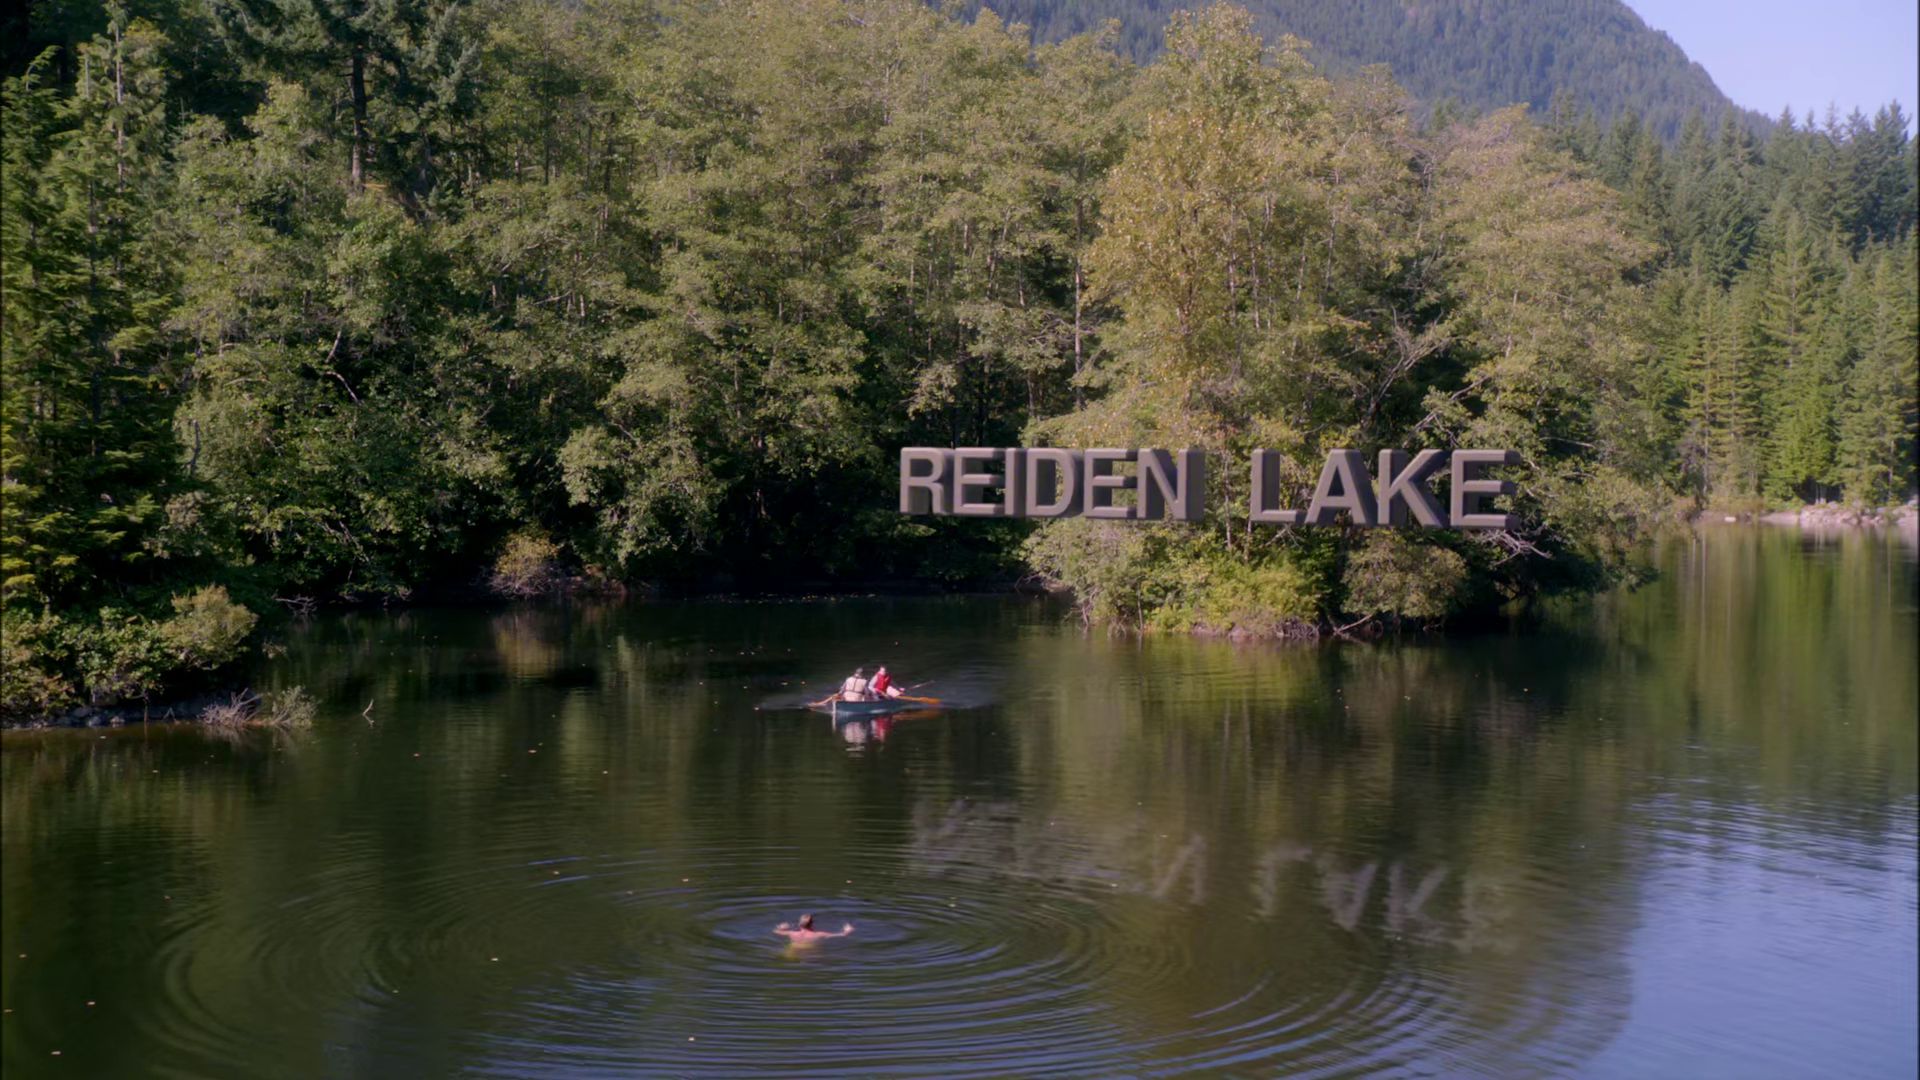 Item of interest: Peter in Reiden Lake